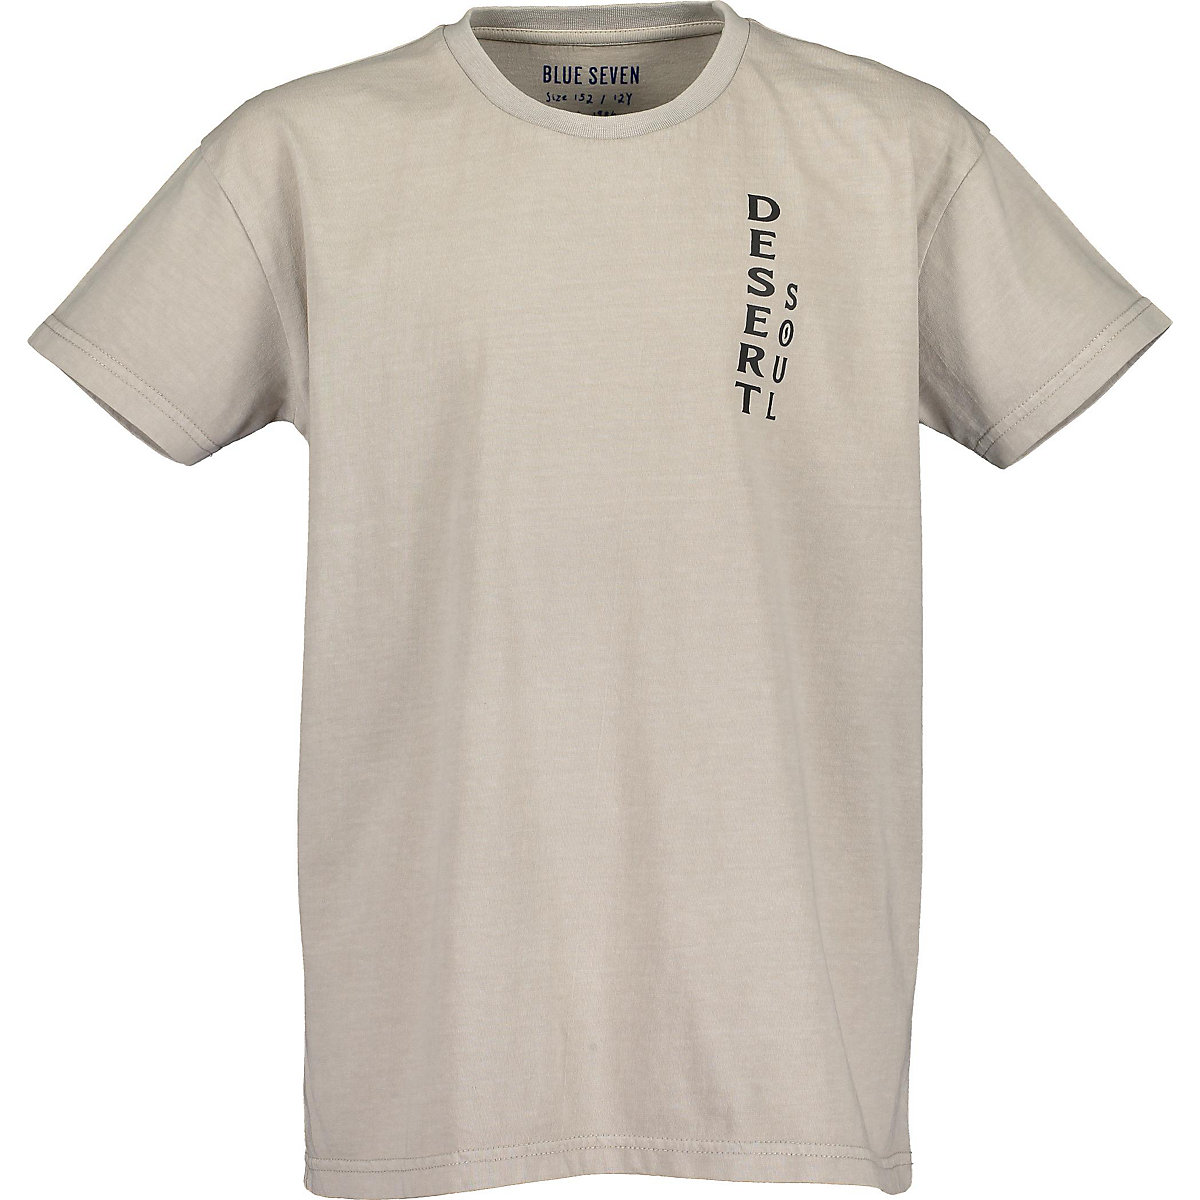 BLUE SEVEN T-Shirt für Jungen beige/grau